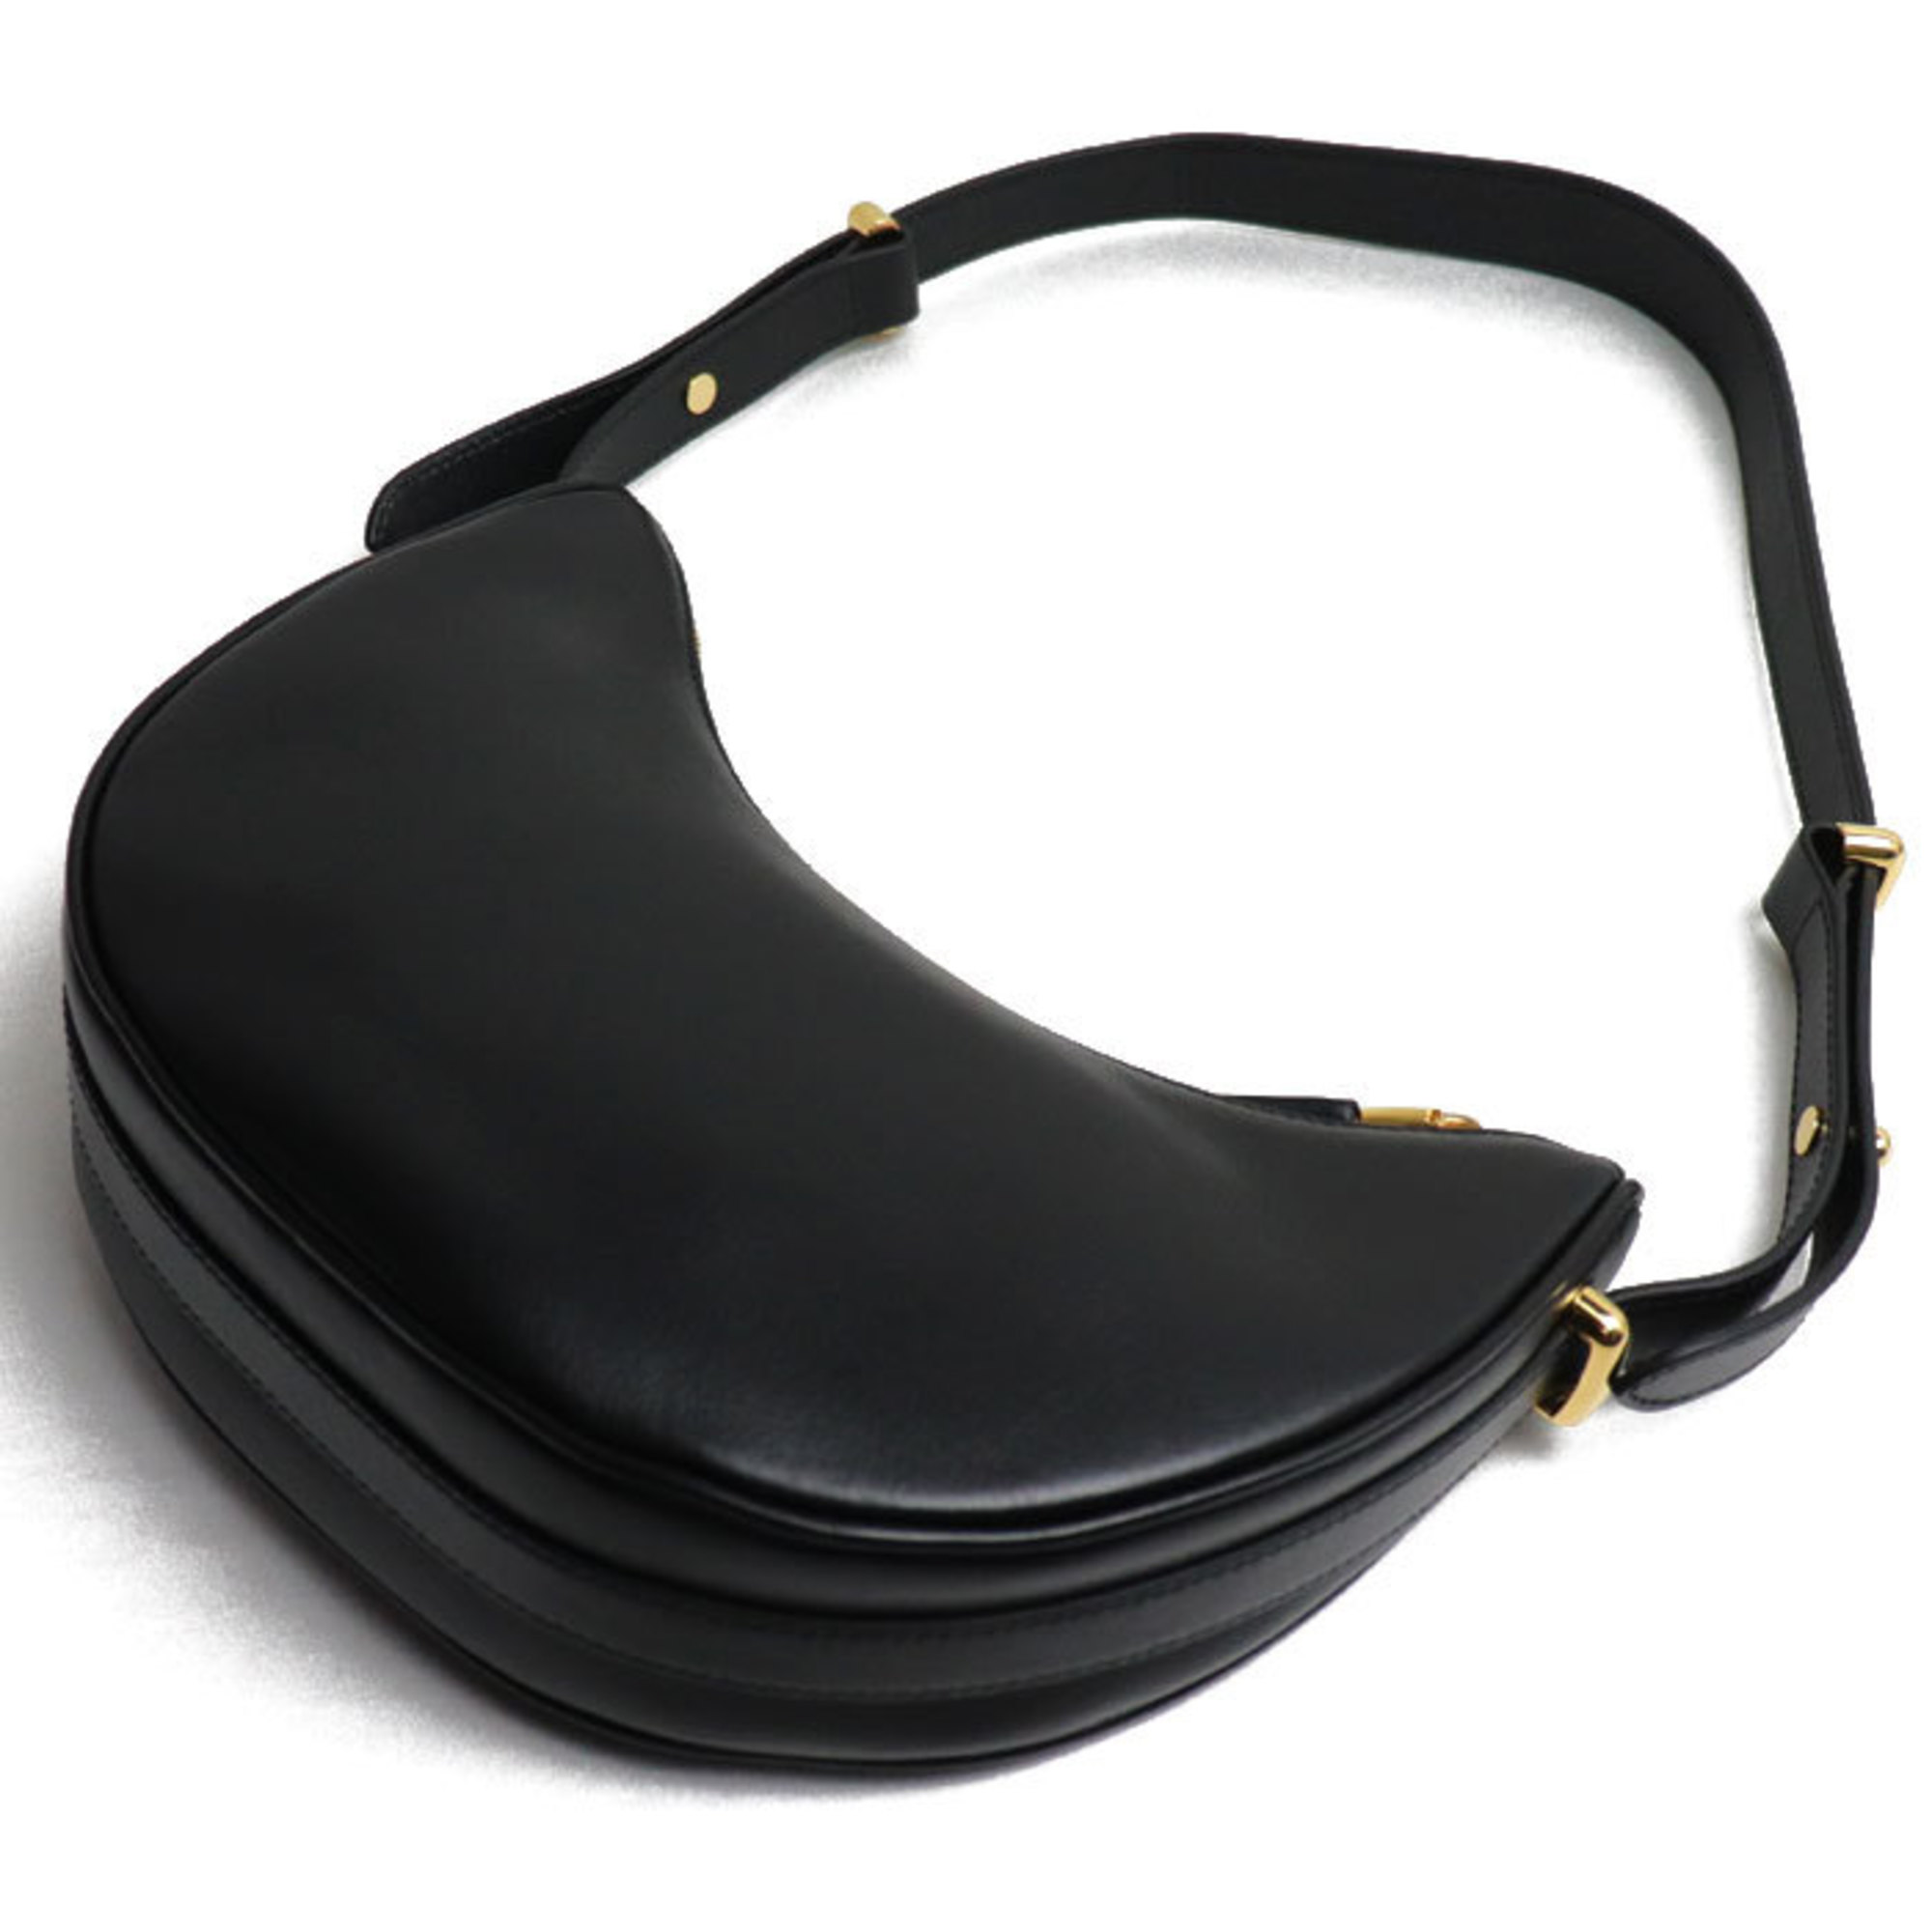 PRADA Prada Arche Shoulder Bag Black 1BC194 IC Chip Ladies